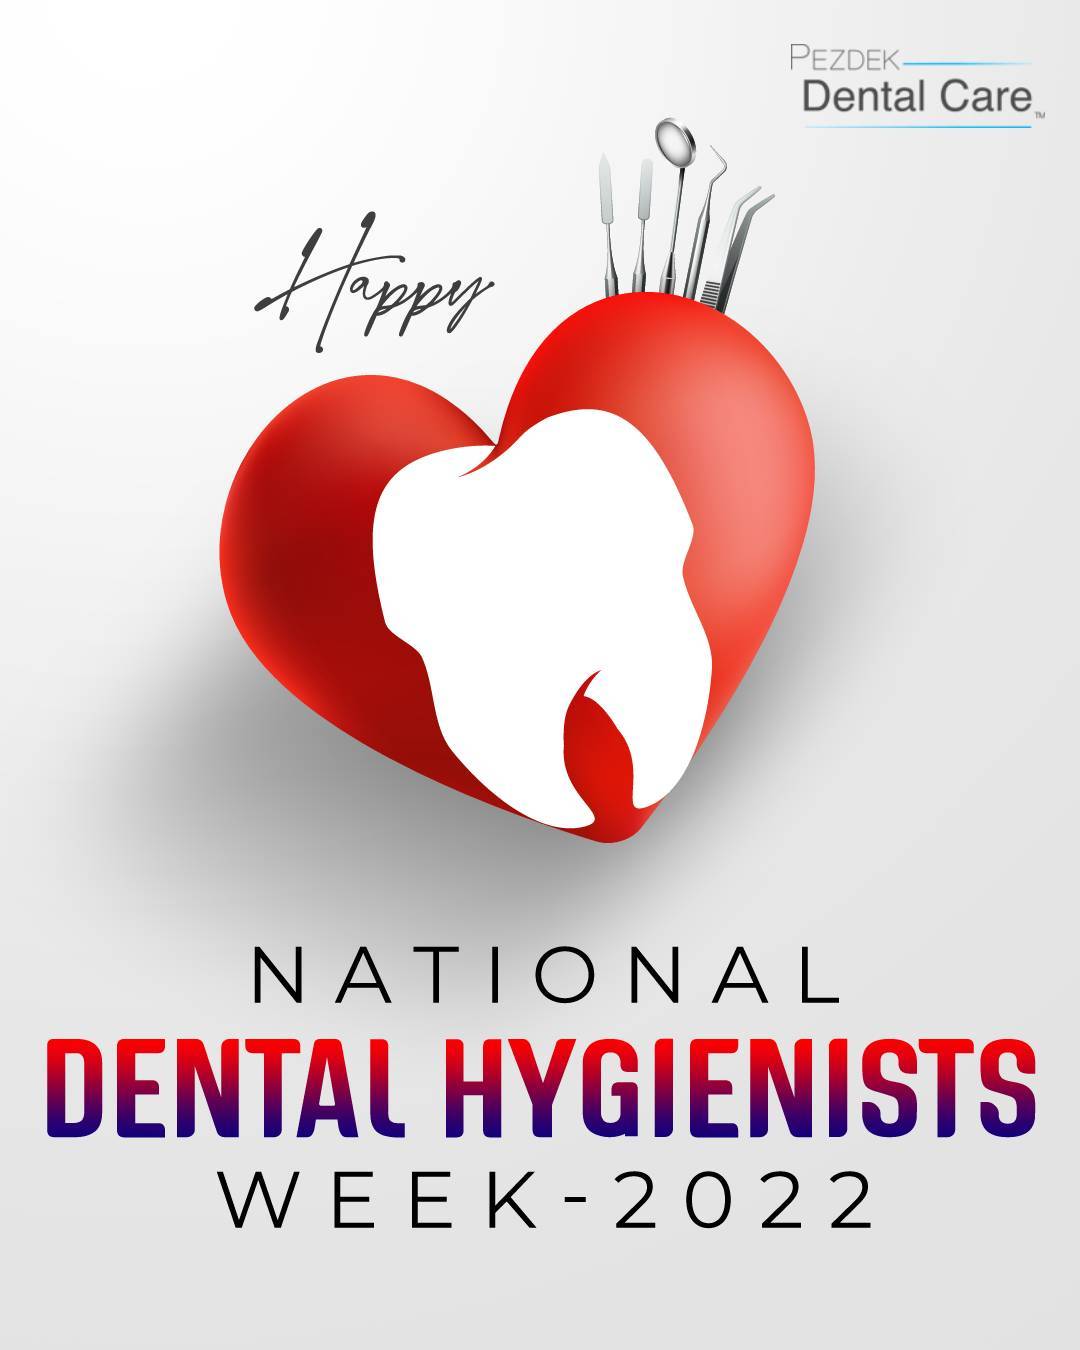 Pezdek Dental Care — Happy National Dental Hygienists Week! 🦷